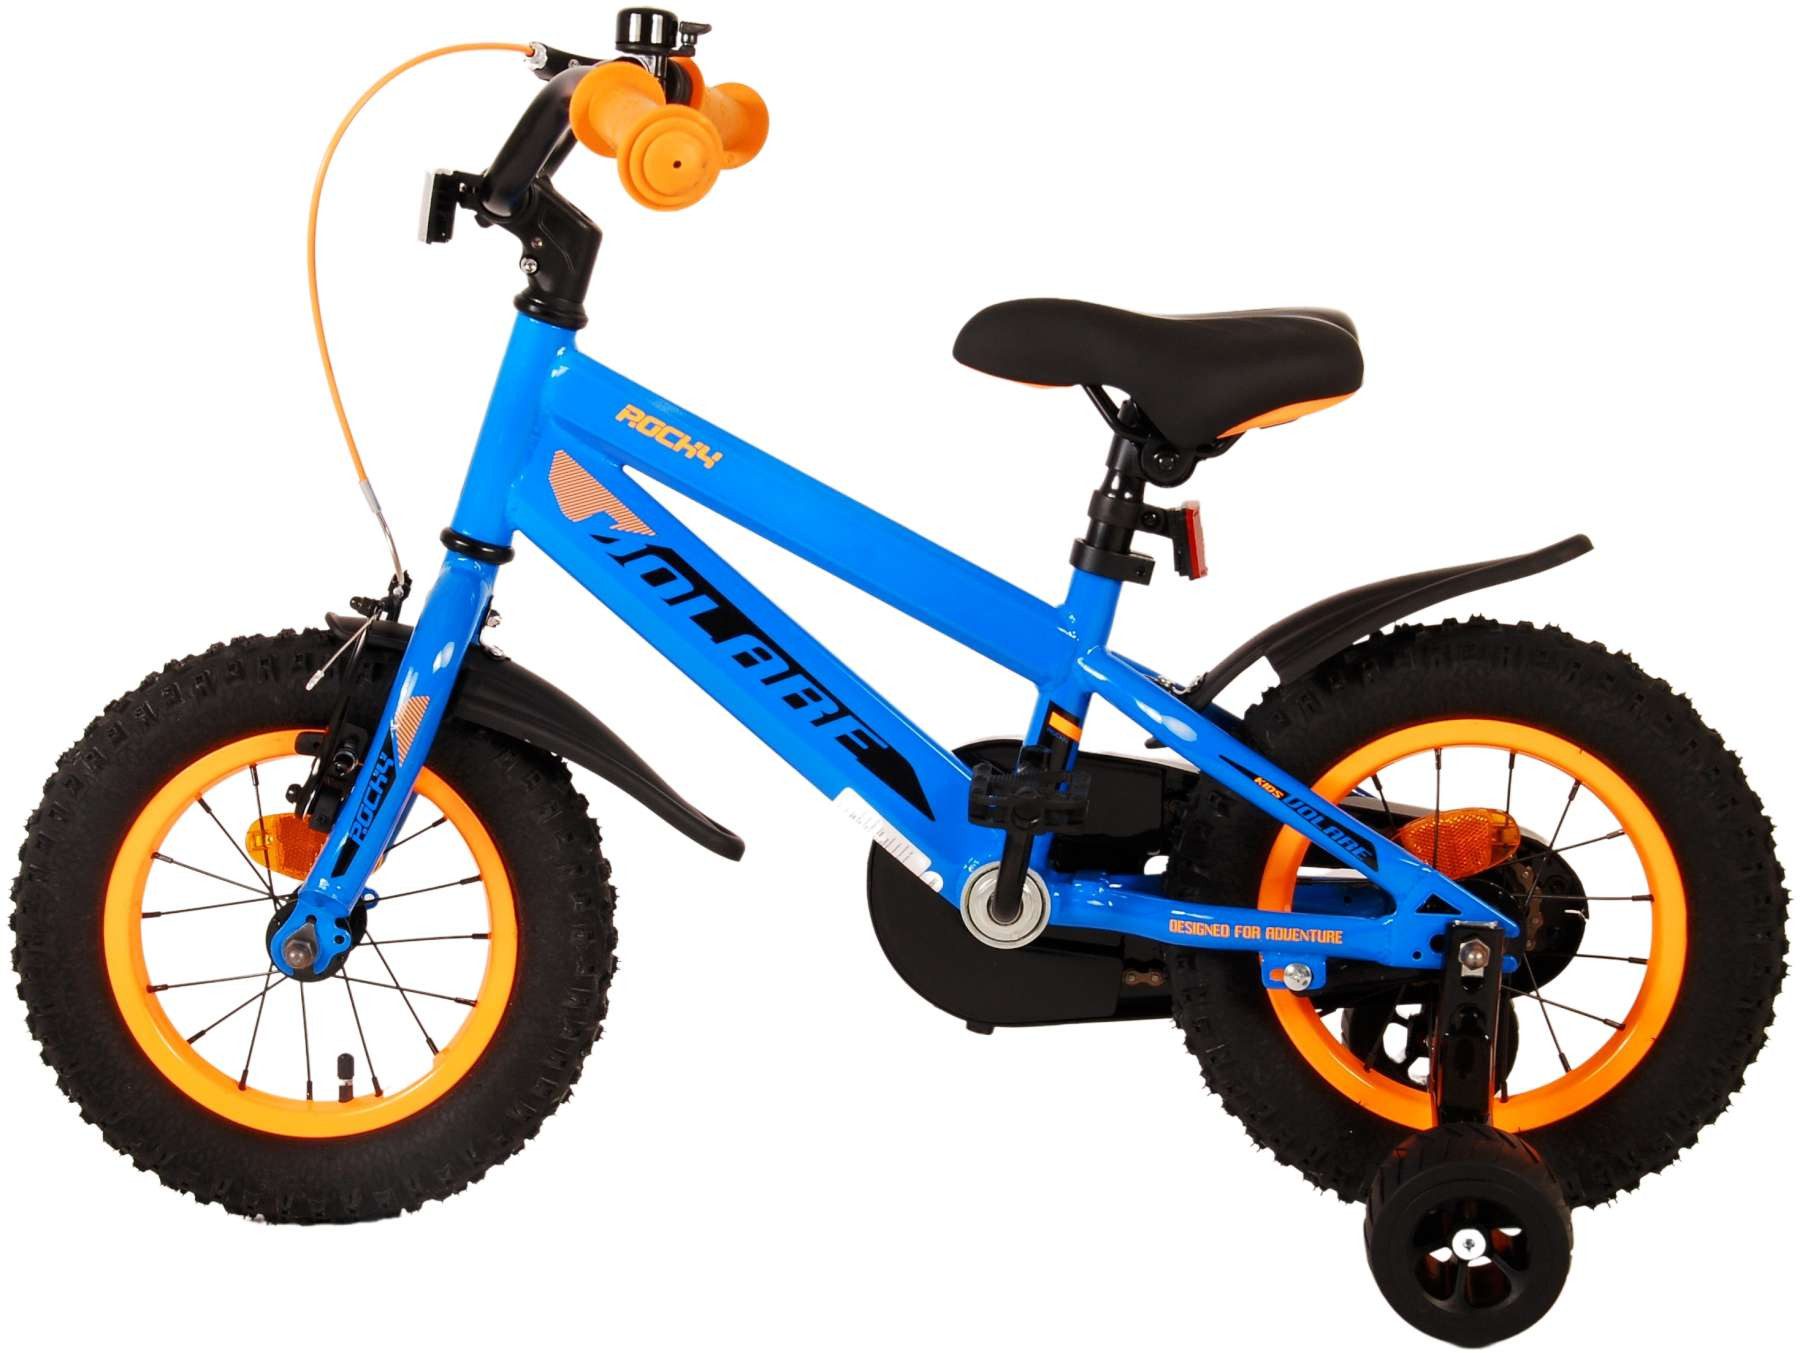 LeNoSa Kinderfahrrad 12 Zoll Fahrrad für Kinder ab 3 Jahren / Hand & Rücktrittbremse